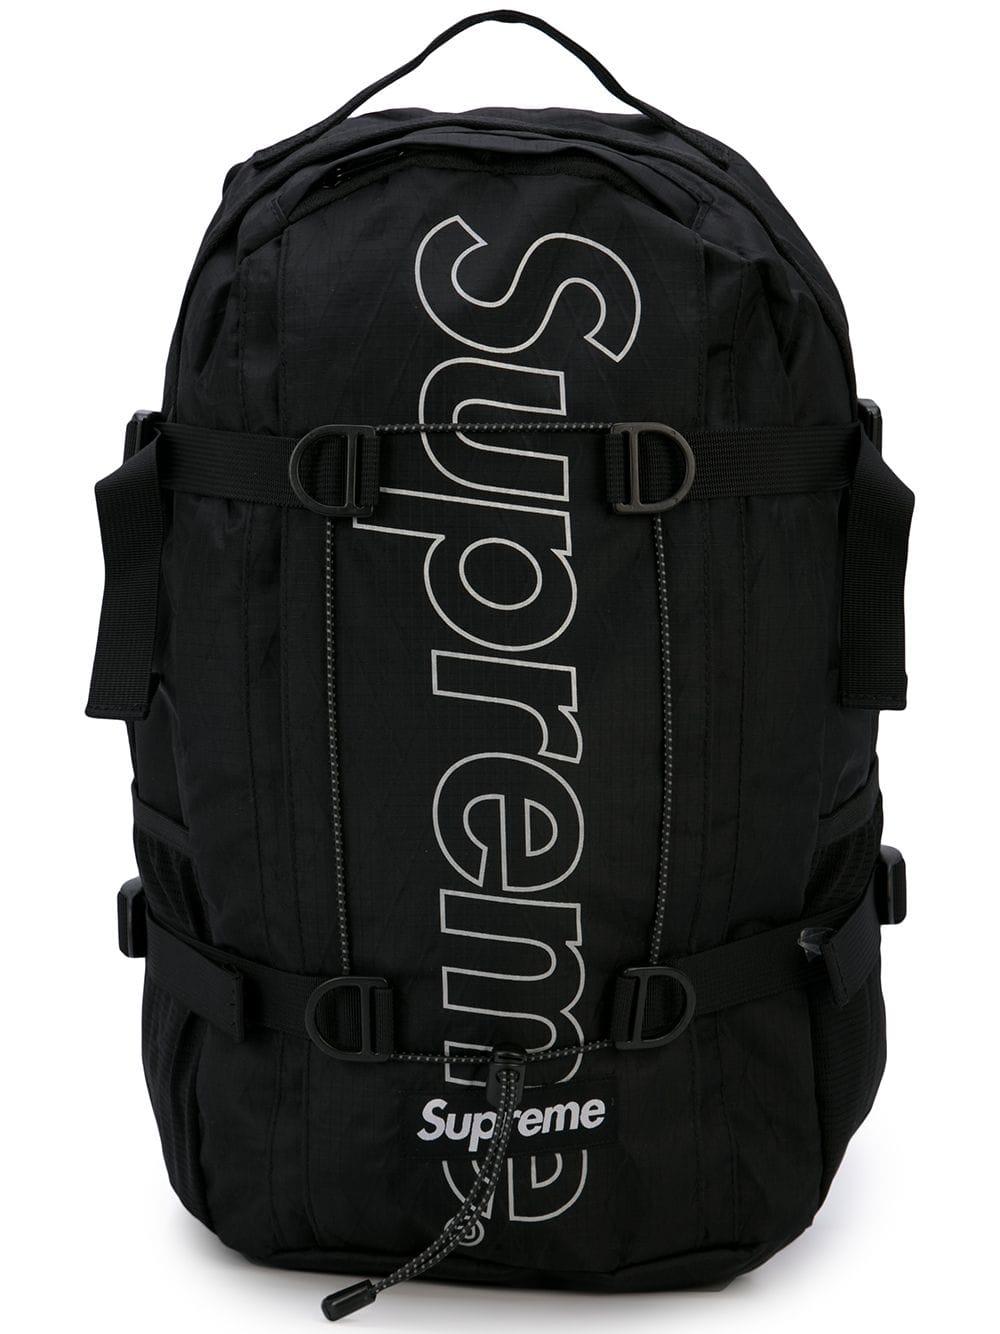 Supreme Backpack Clearance, 57% OFF | www.ingeniovirtual.com